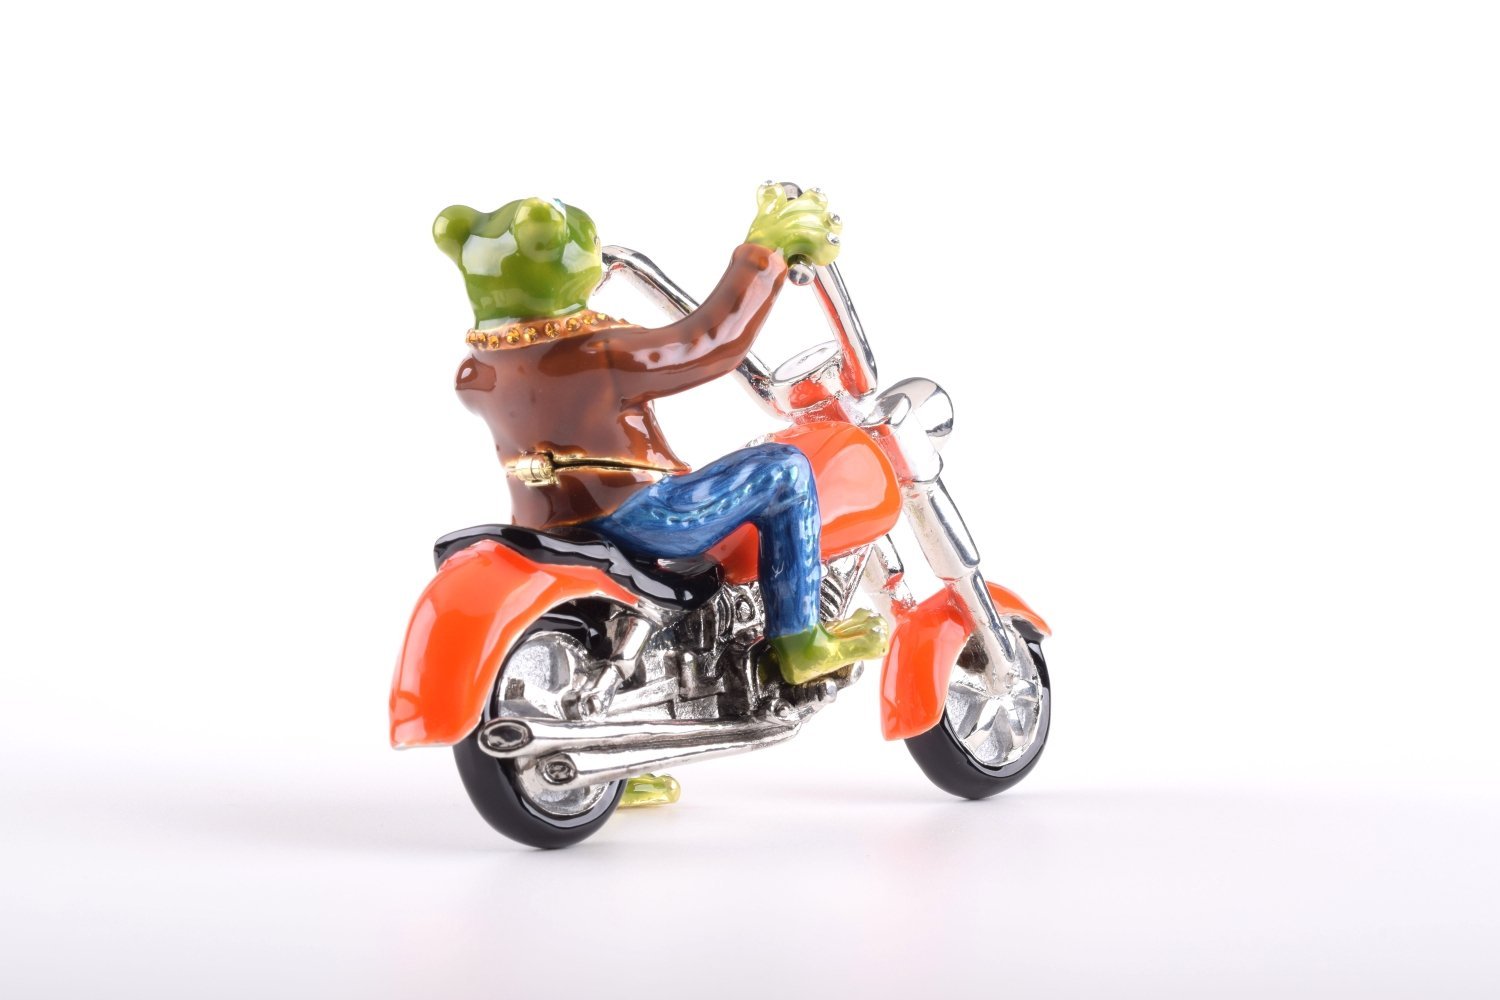 Keren Kopal Frog on bike Motorcycle  141.50